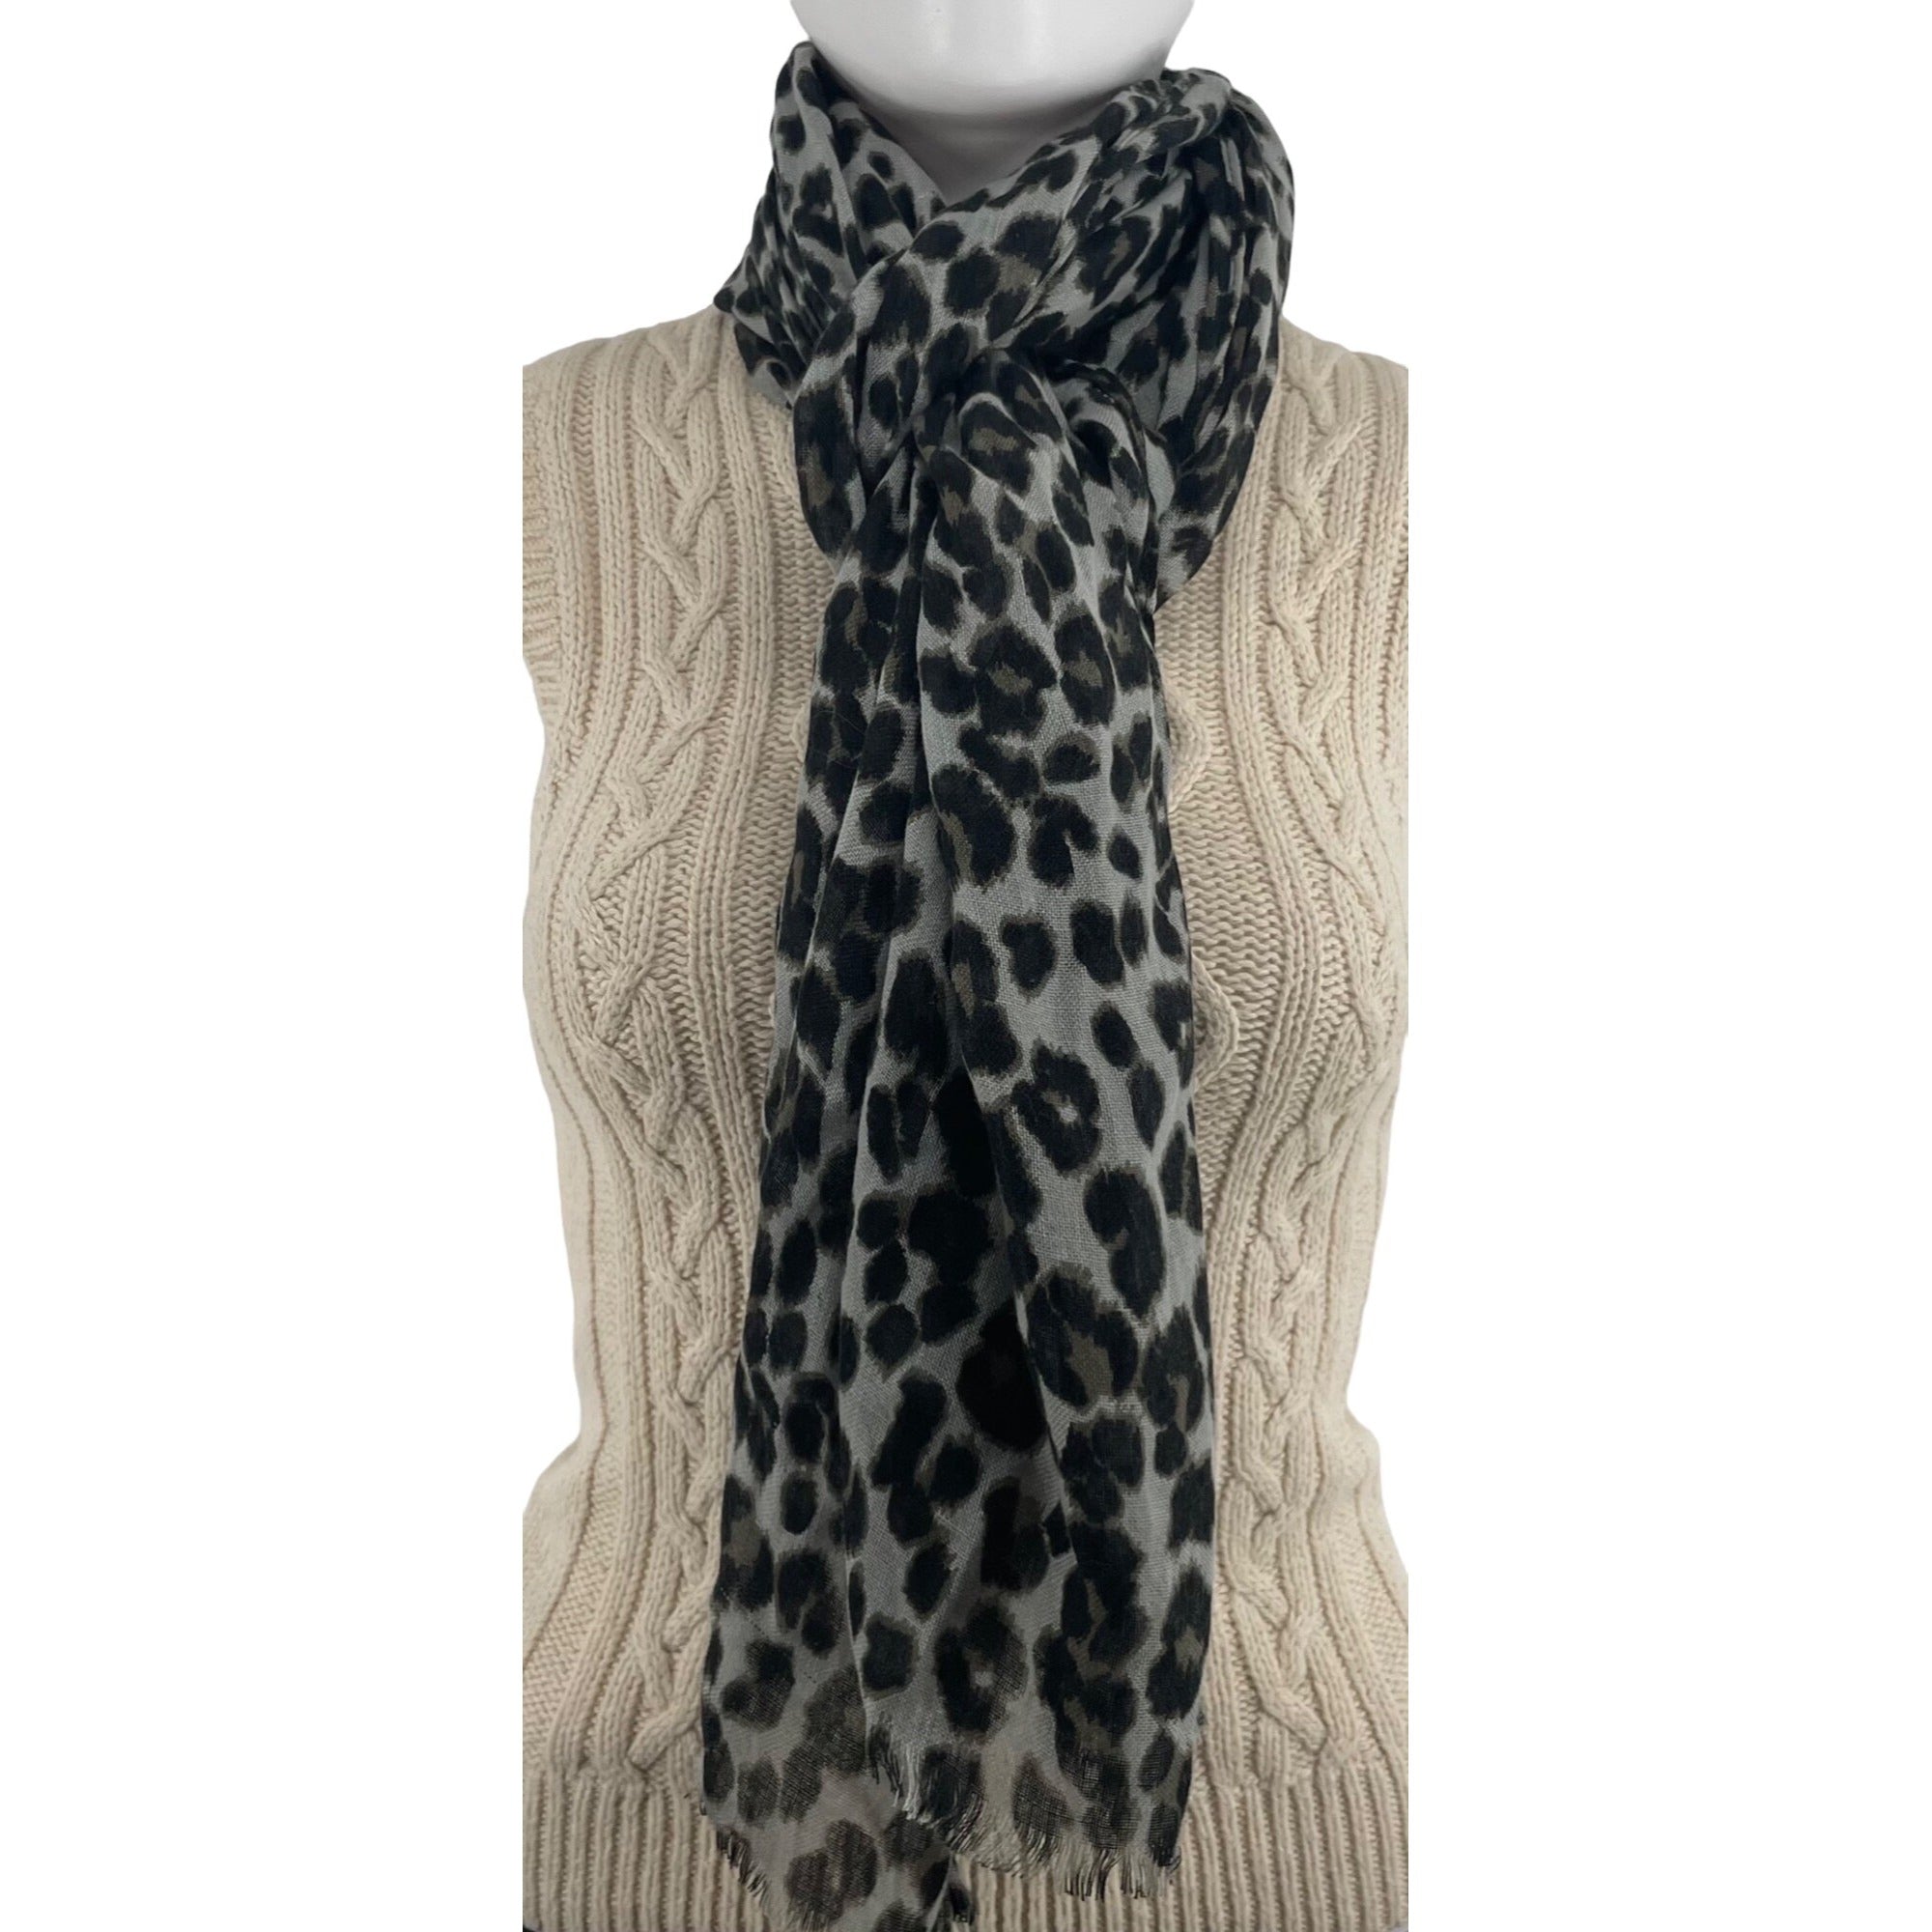 Women's Grey, Olive & Black Leopard Print Sheer Scarf W/ Fringe Hem